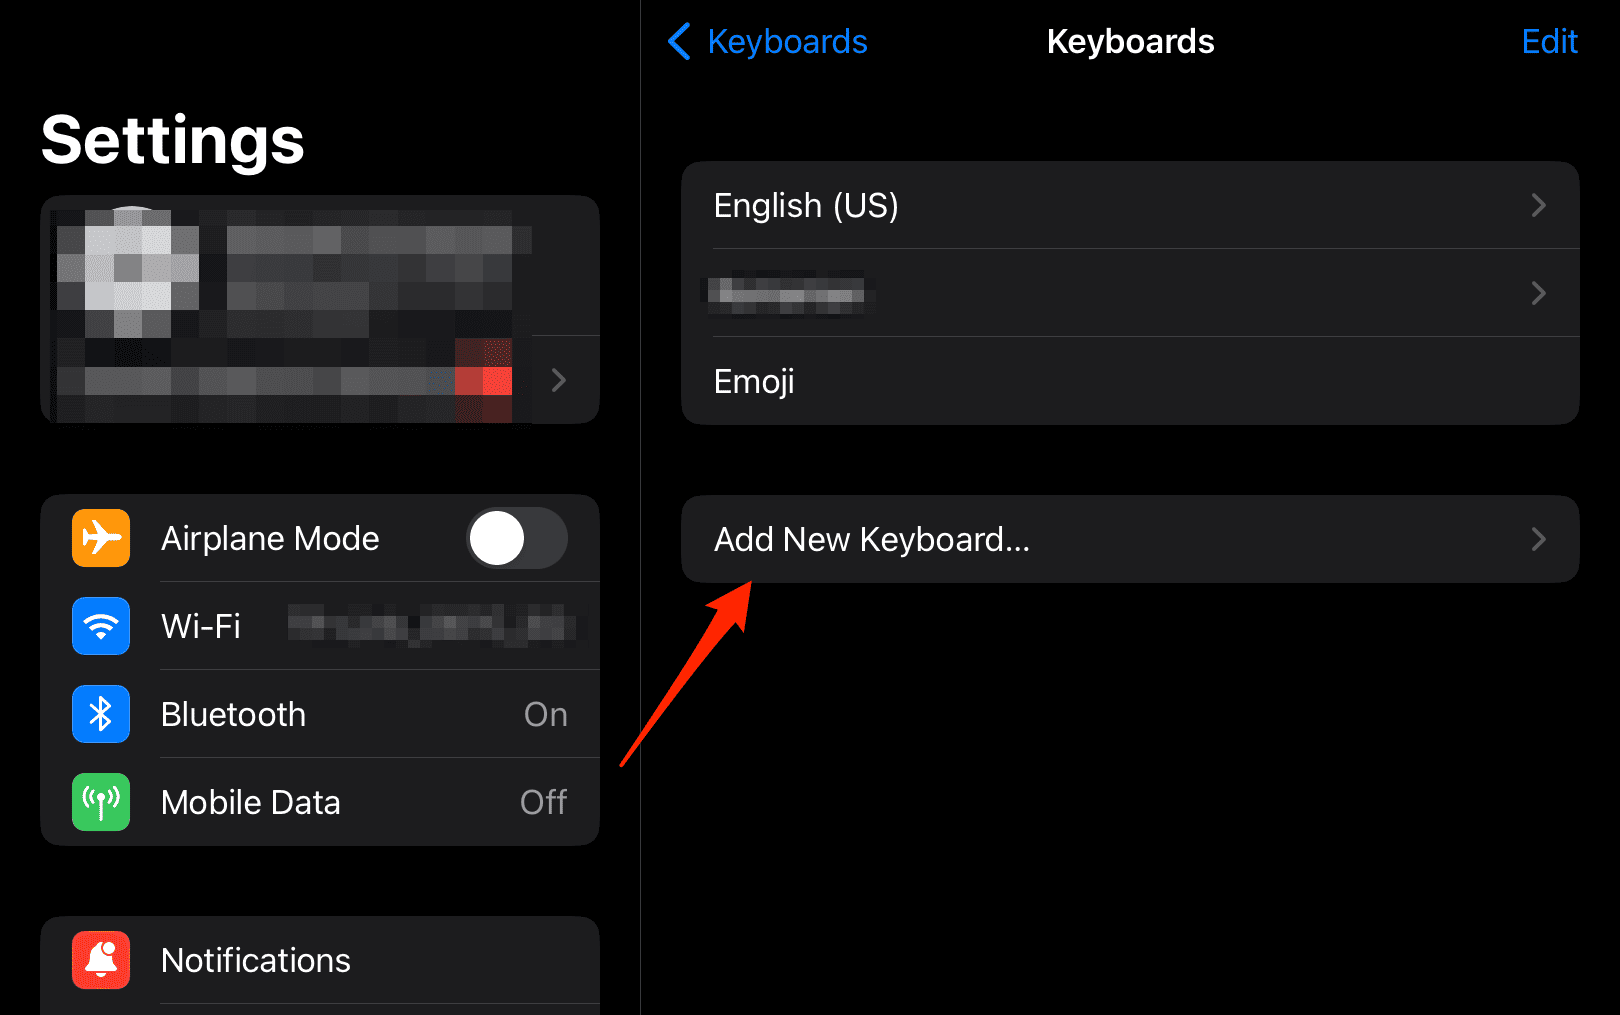 add_new_kb how to make keyboard bigger on ipad
